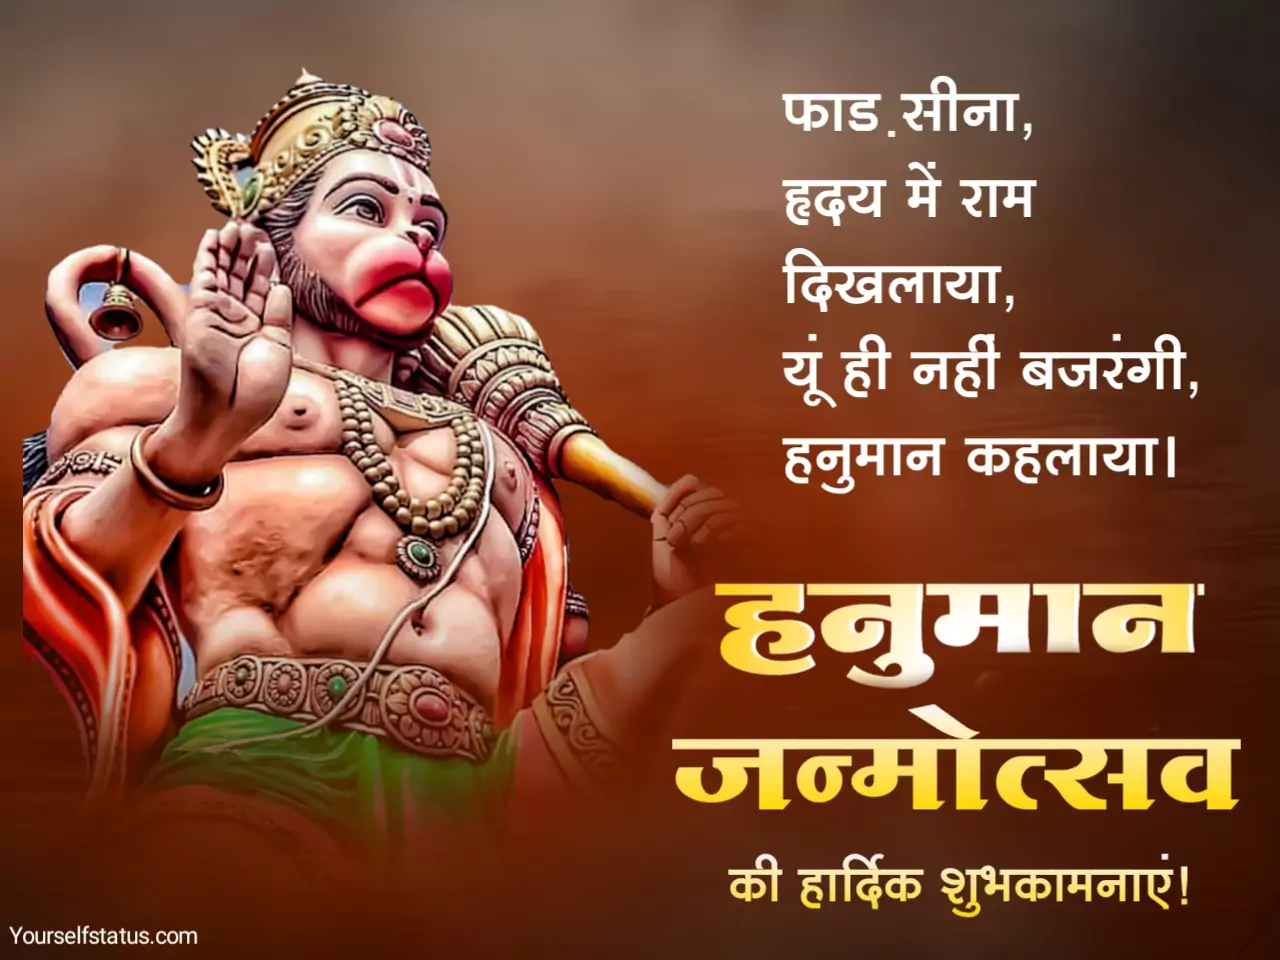 Hanuman jayanti quotes in hindi